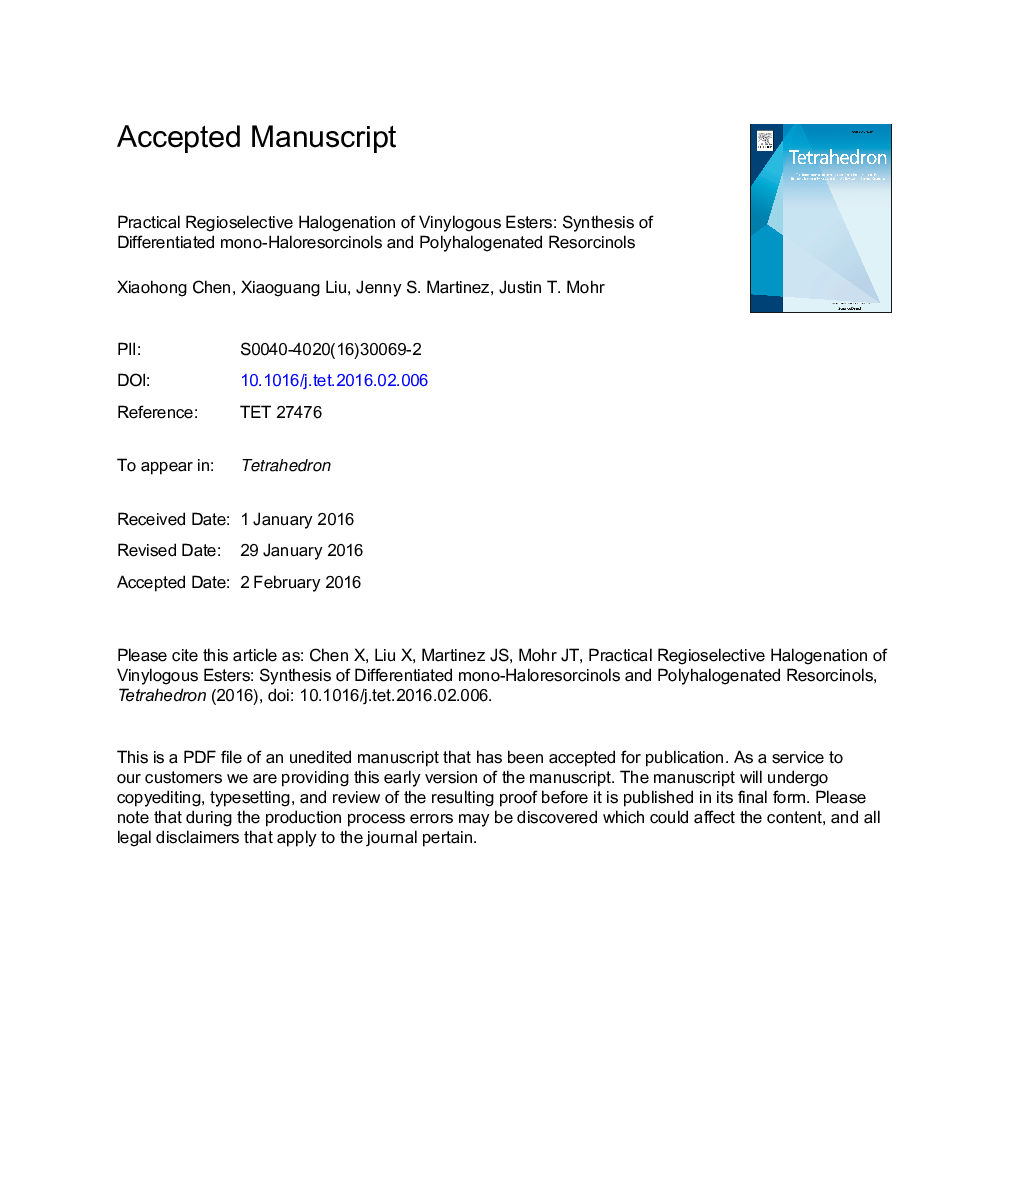 Practical regioselective halogenation of vinylogous esters: synthesis of differentiated mono-haloresorcinols and polyhalogenated resorcinols